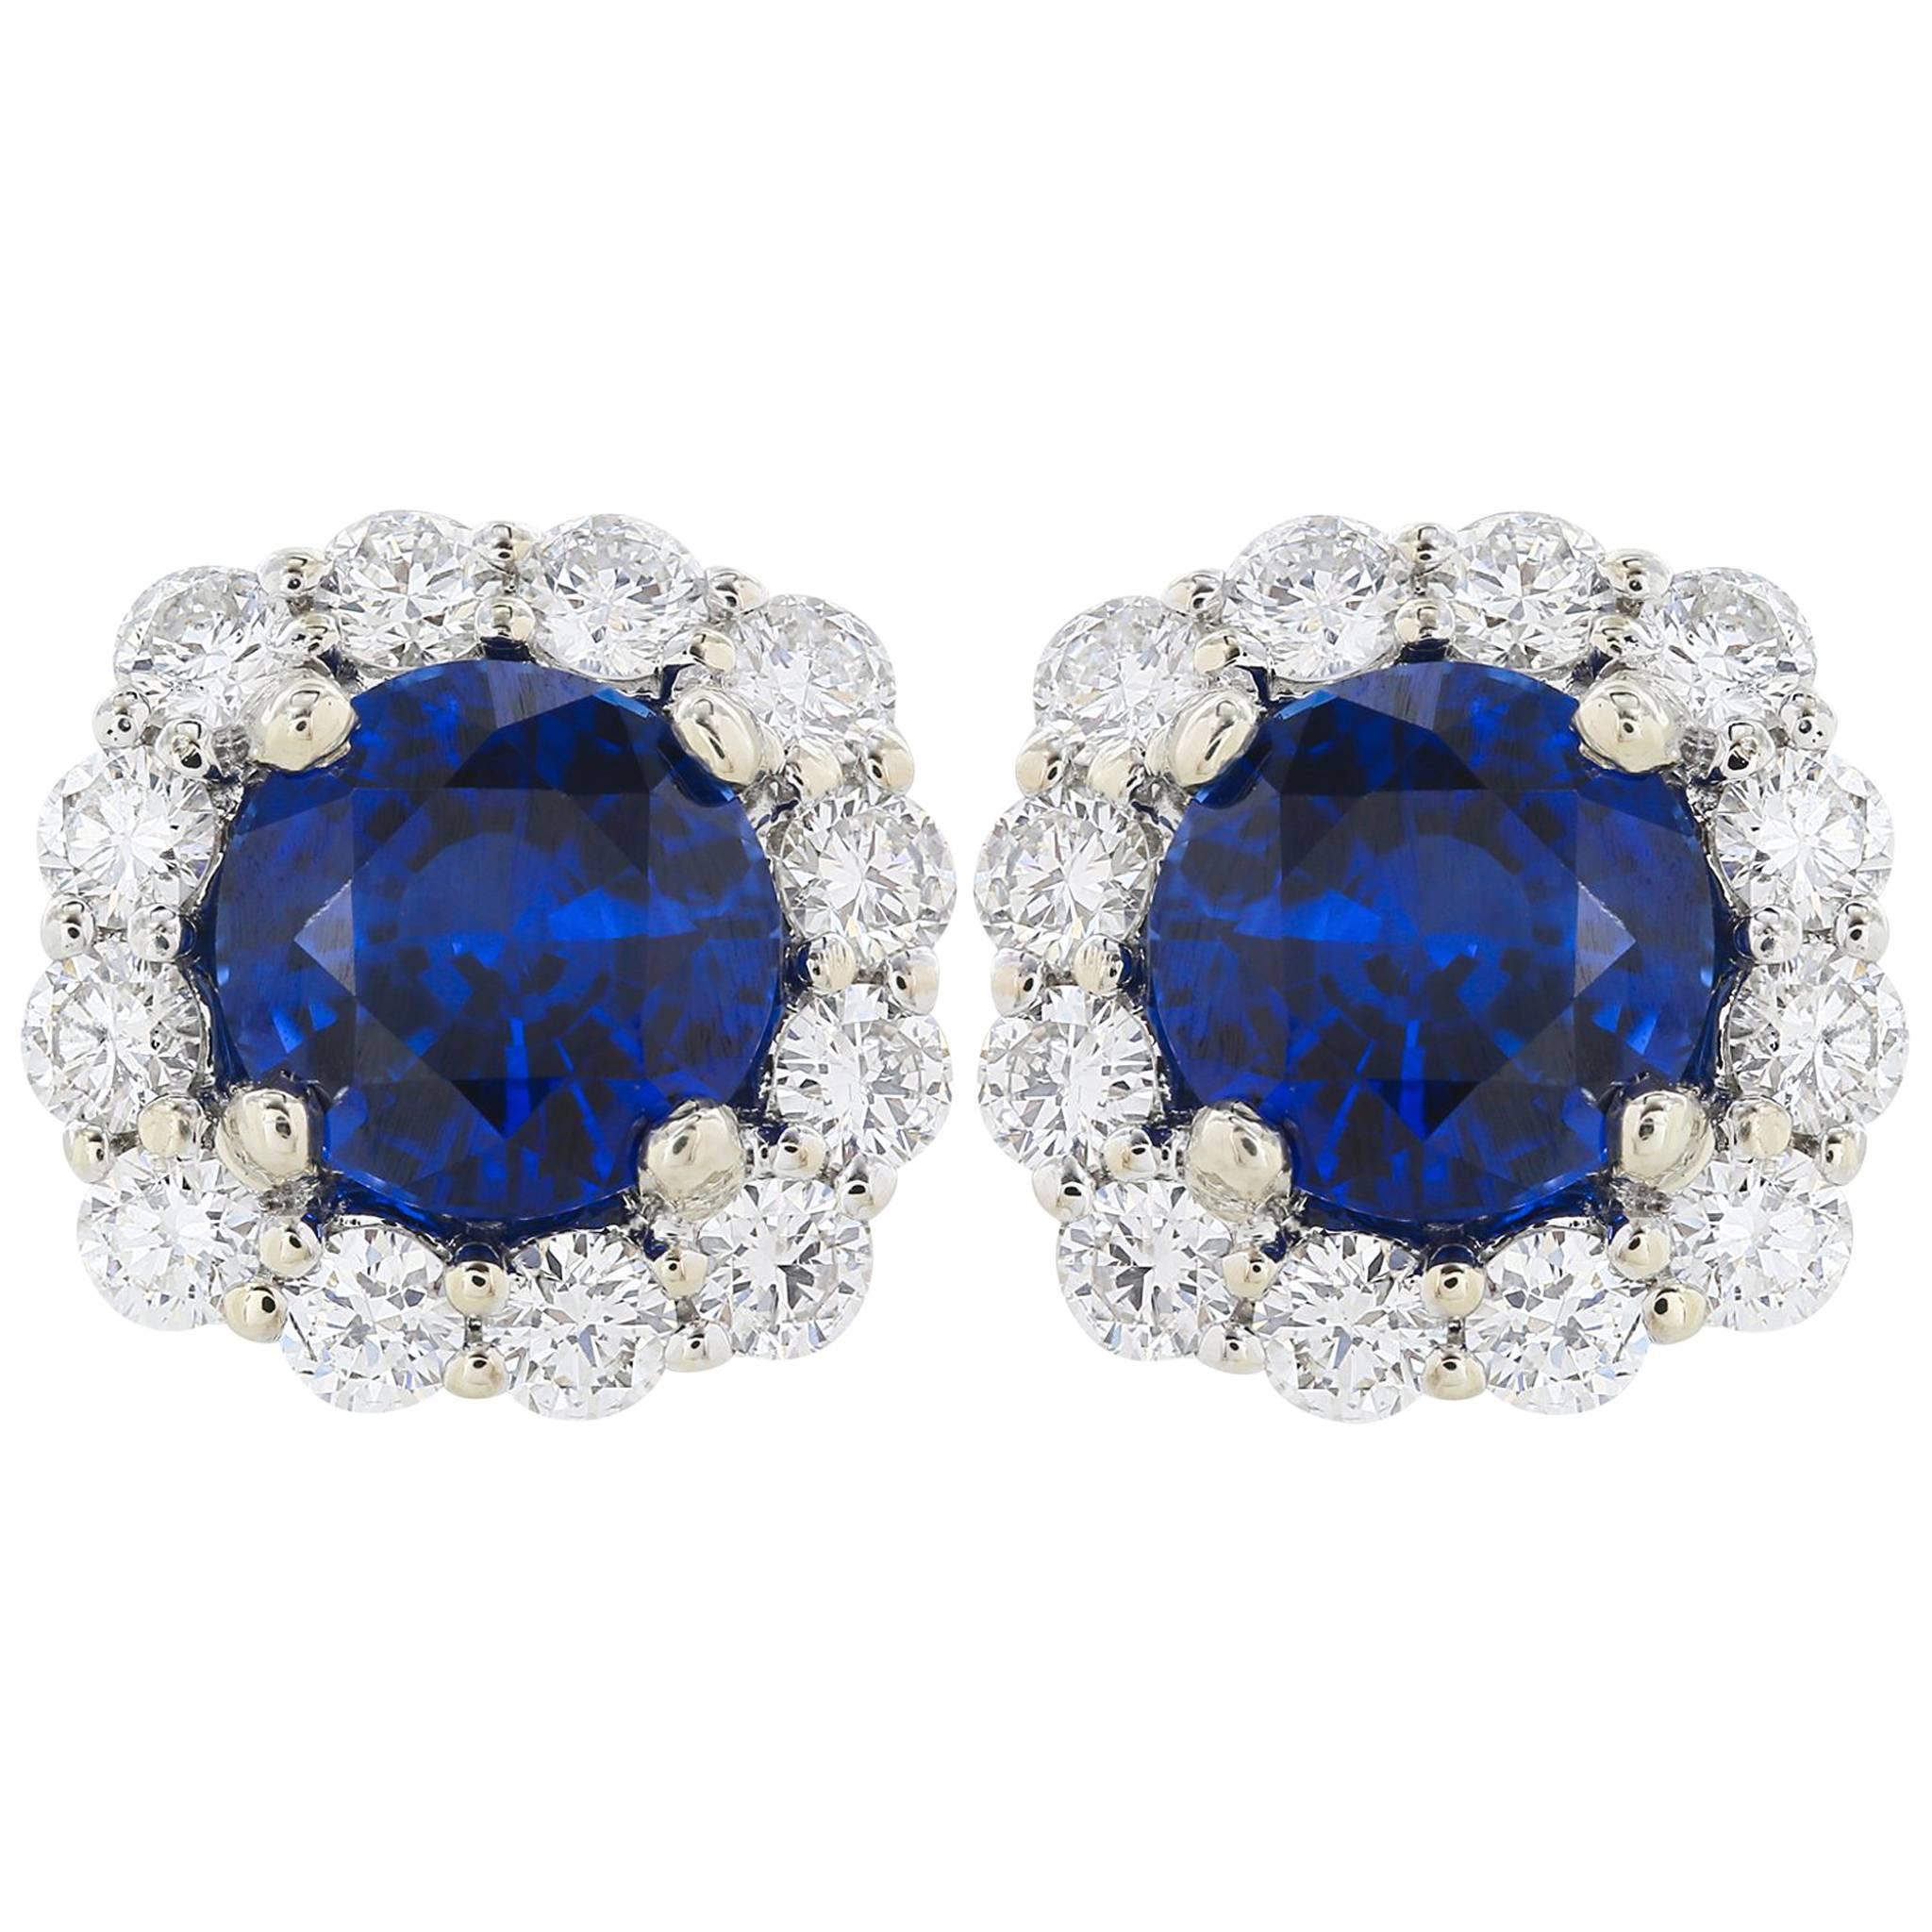 2.23 Carat Ceylon Sapphire Diamond Stud Earrings